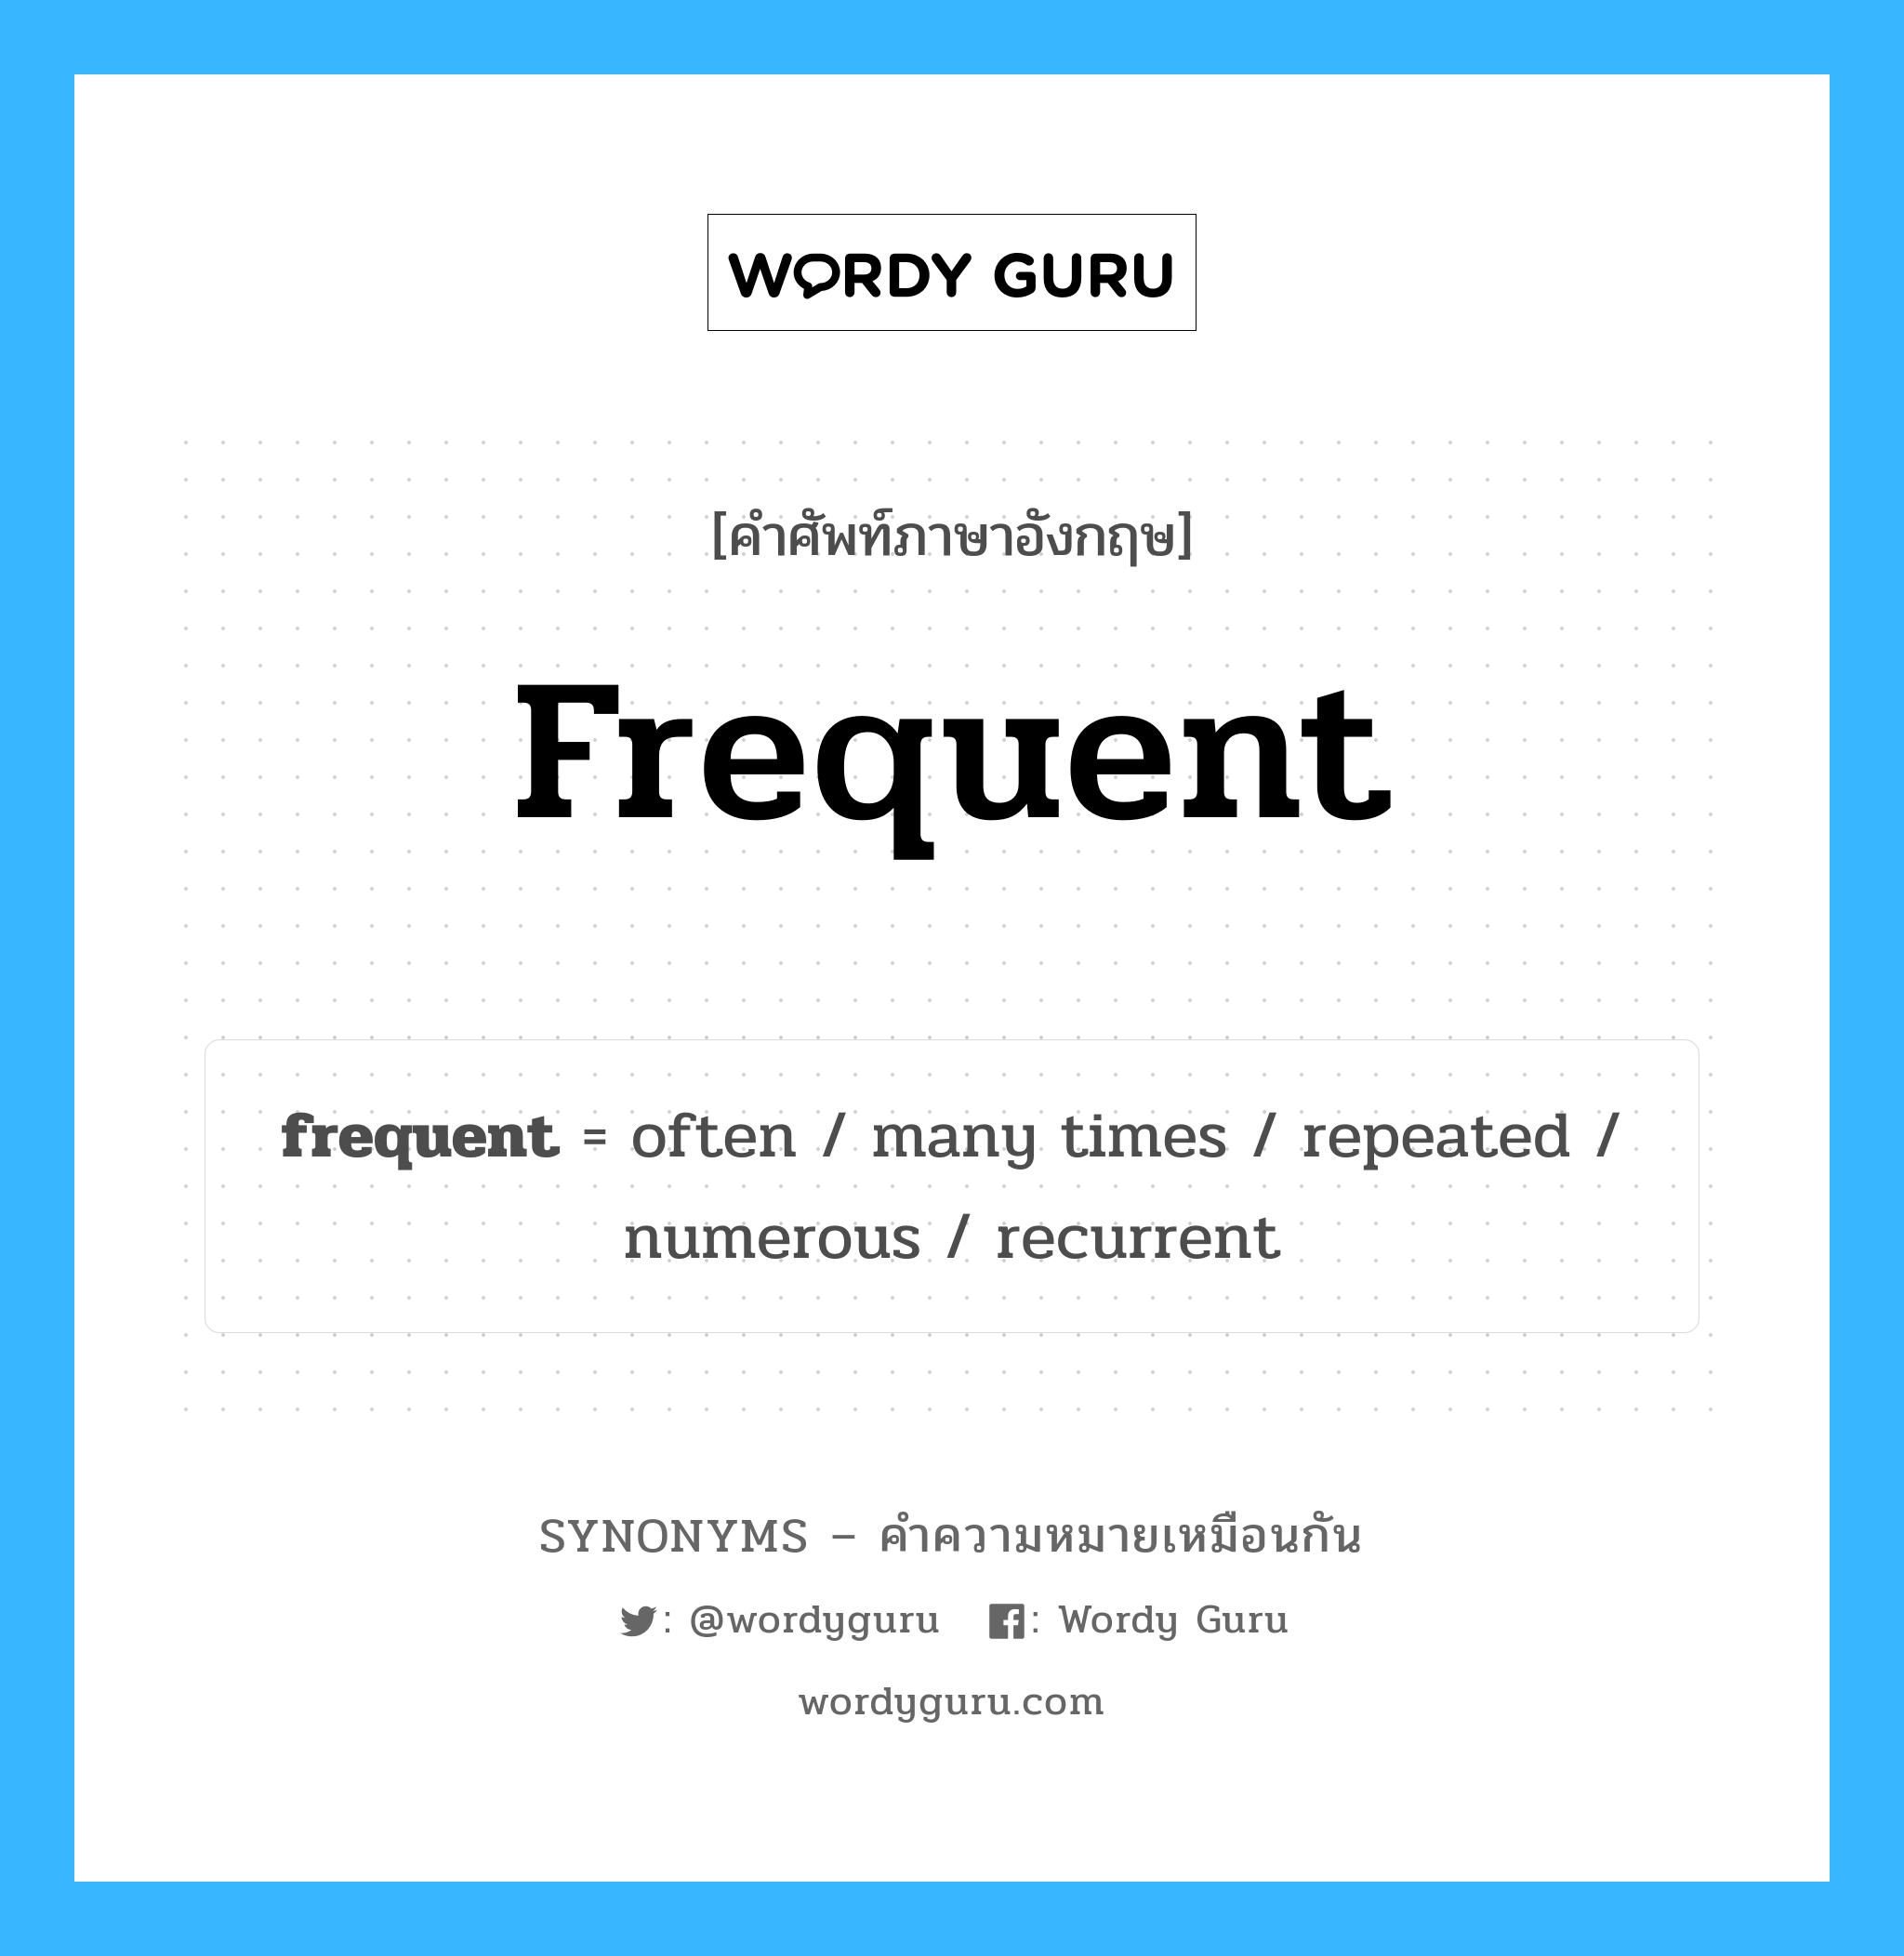 often เป็นหนึ่งใน frequent และมีคำอื่น ๆ อีกดังนี้, คำศัพท์ภาษาอังกฤษ often ความหมายคล้ายกันกับ frequent แปลว่า มักจะ หมวด frequent